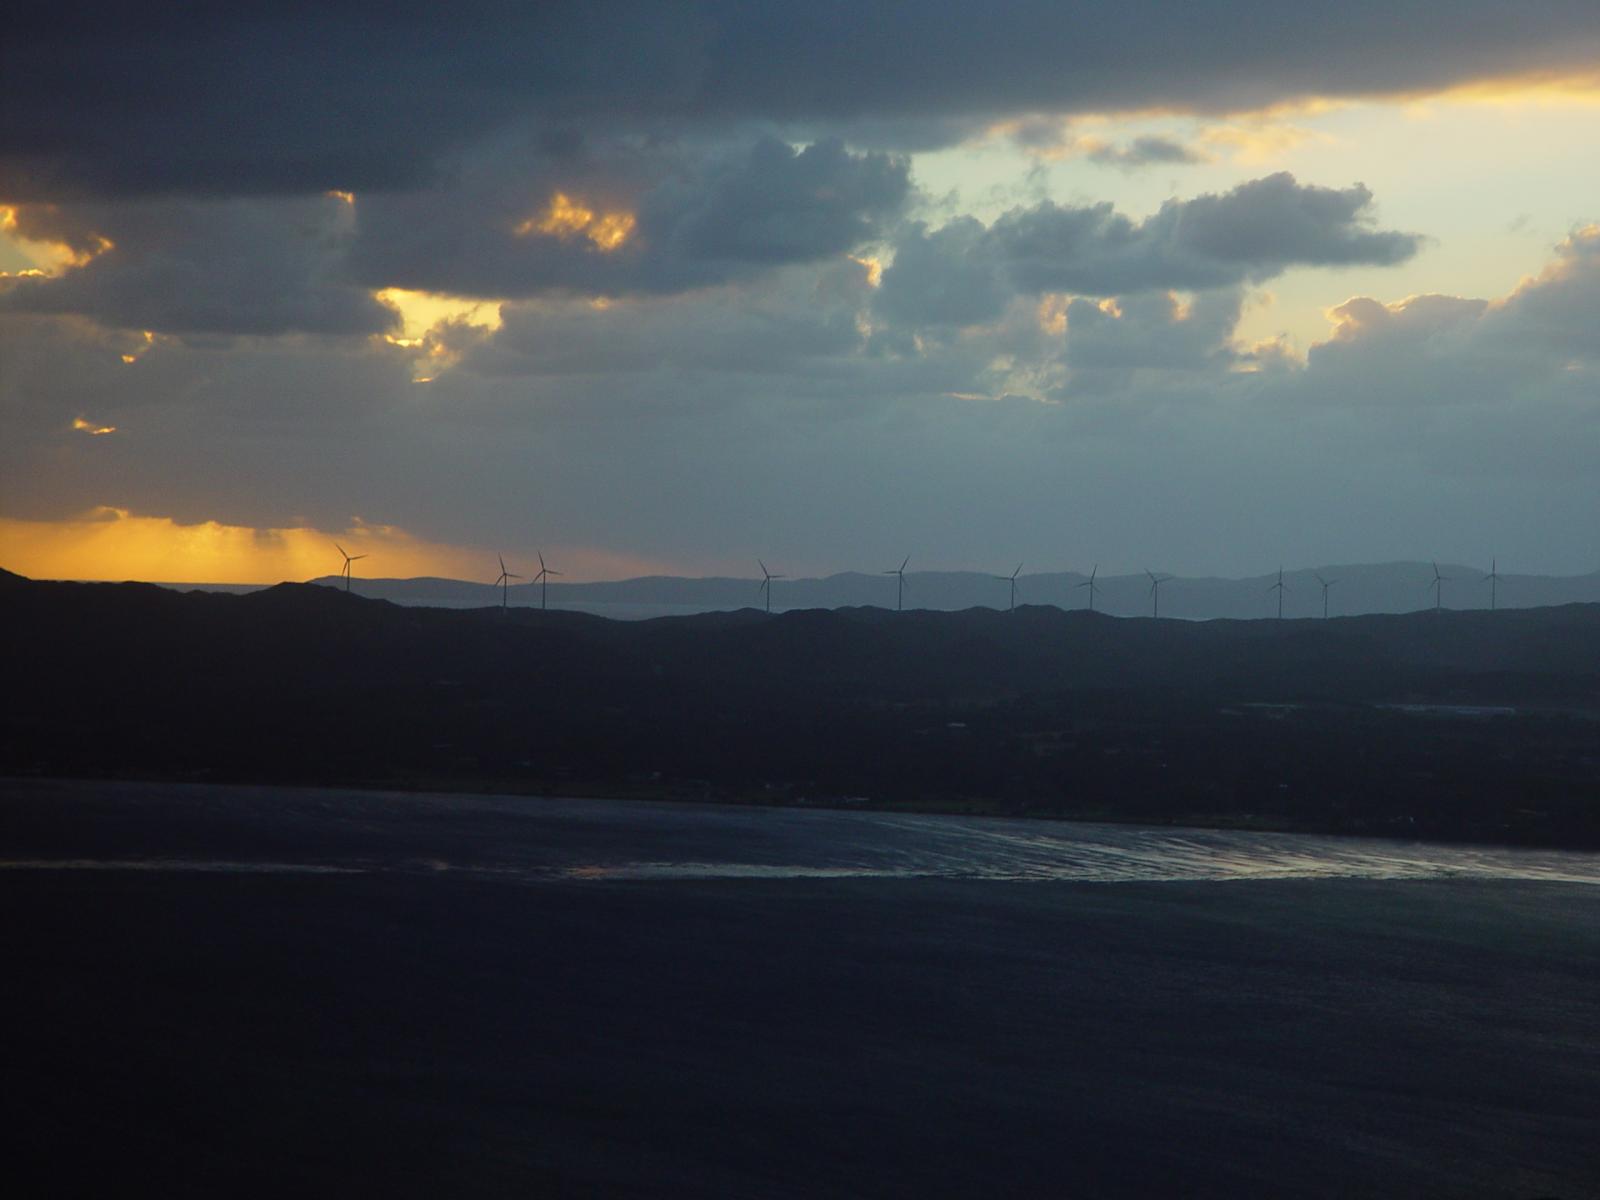 Albany wind-farm against the sunset, Western Australia